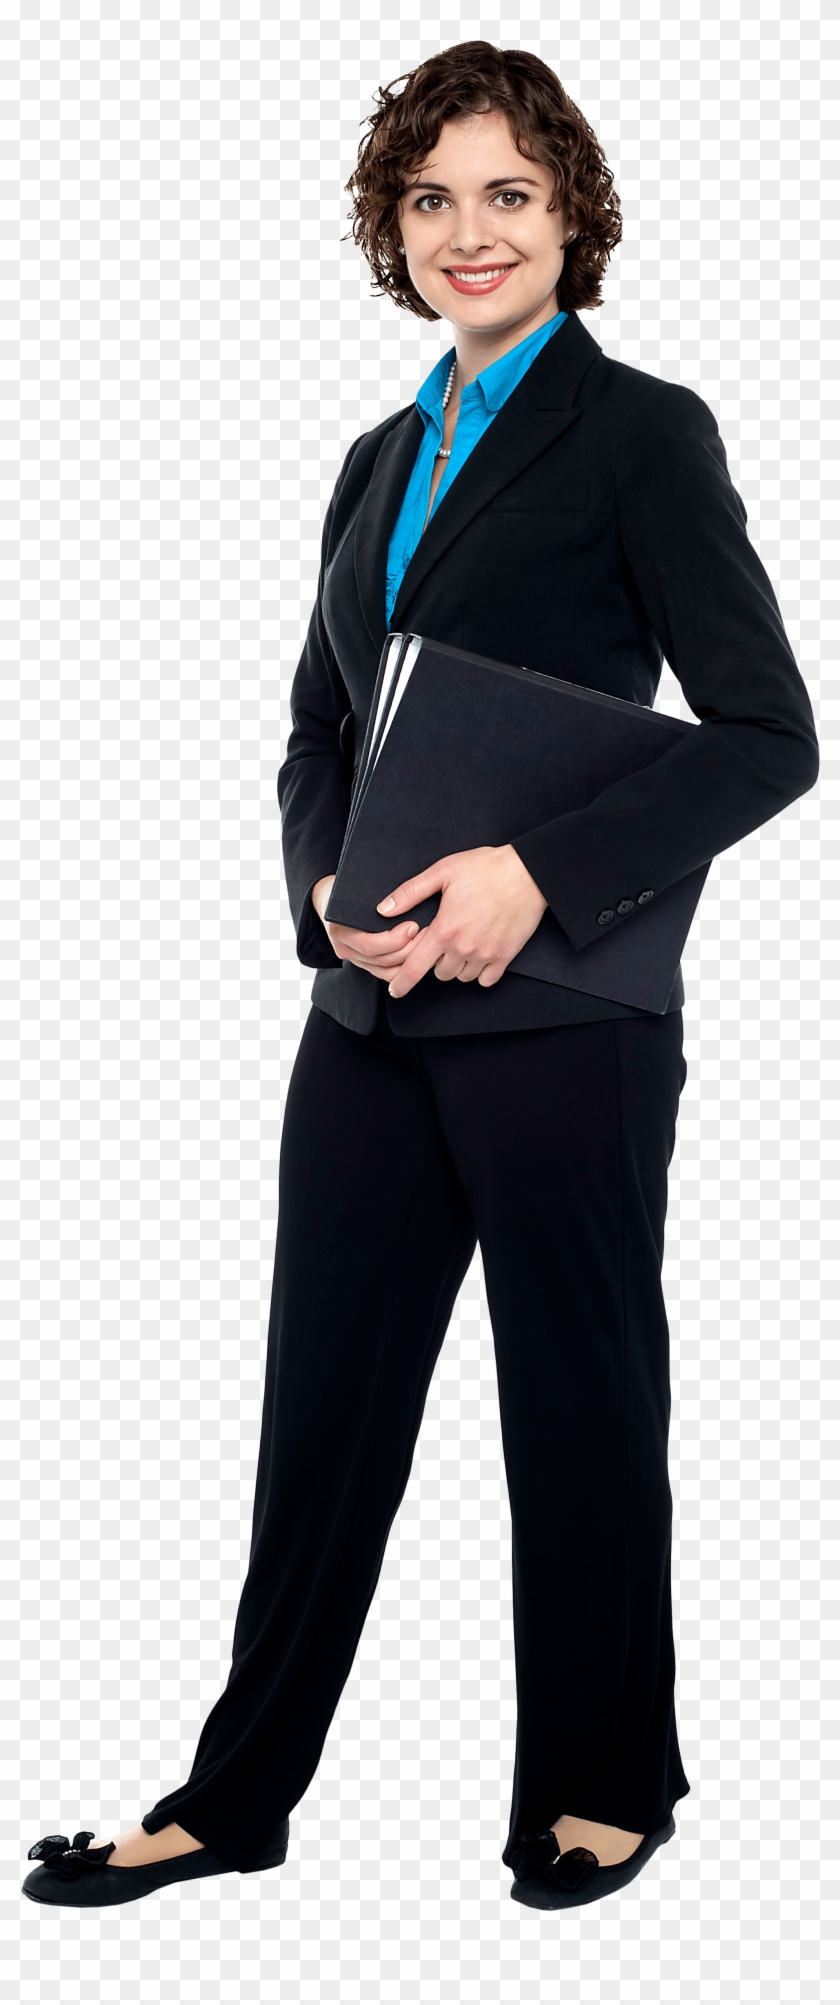 Transparent Background Woman Business Suit - Business Woman No Background Clipart #401618